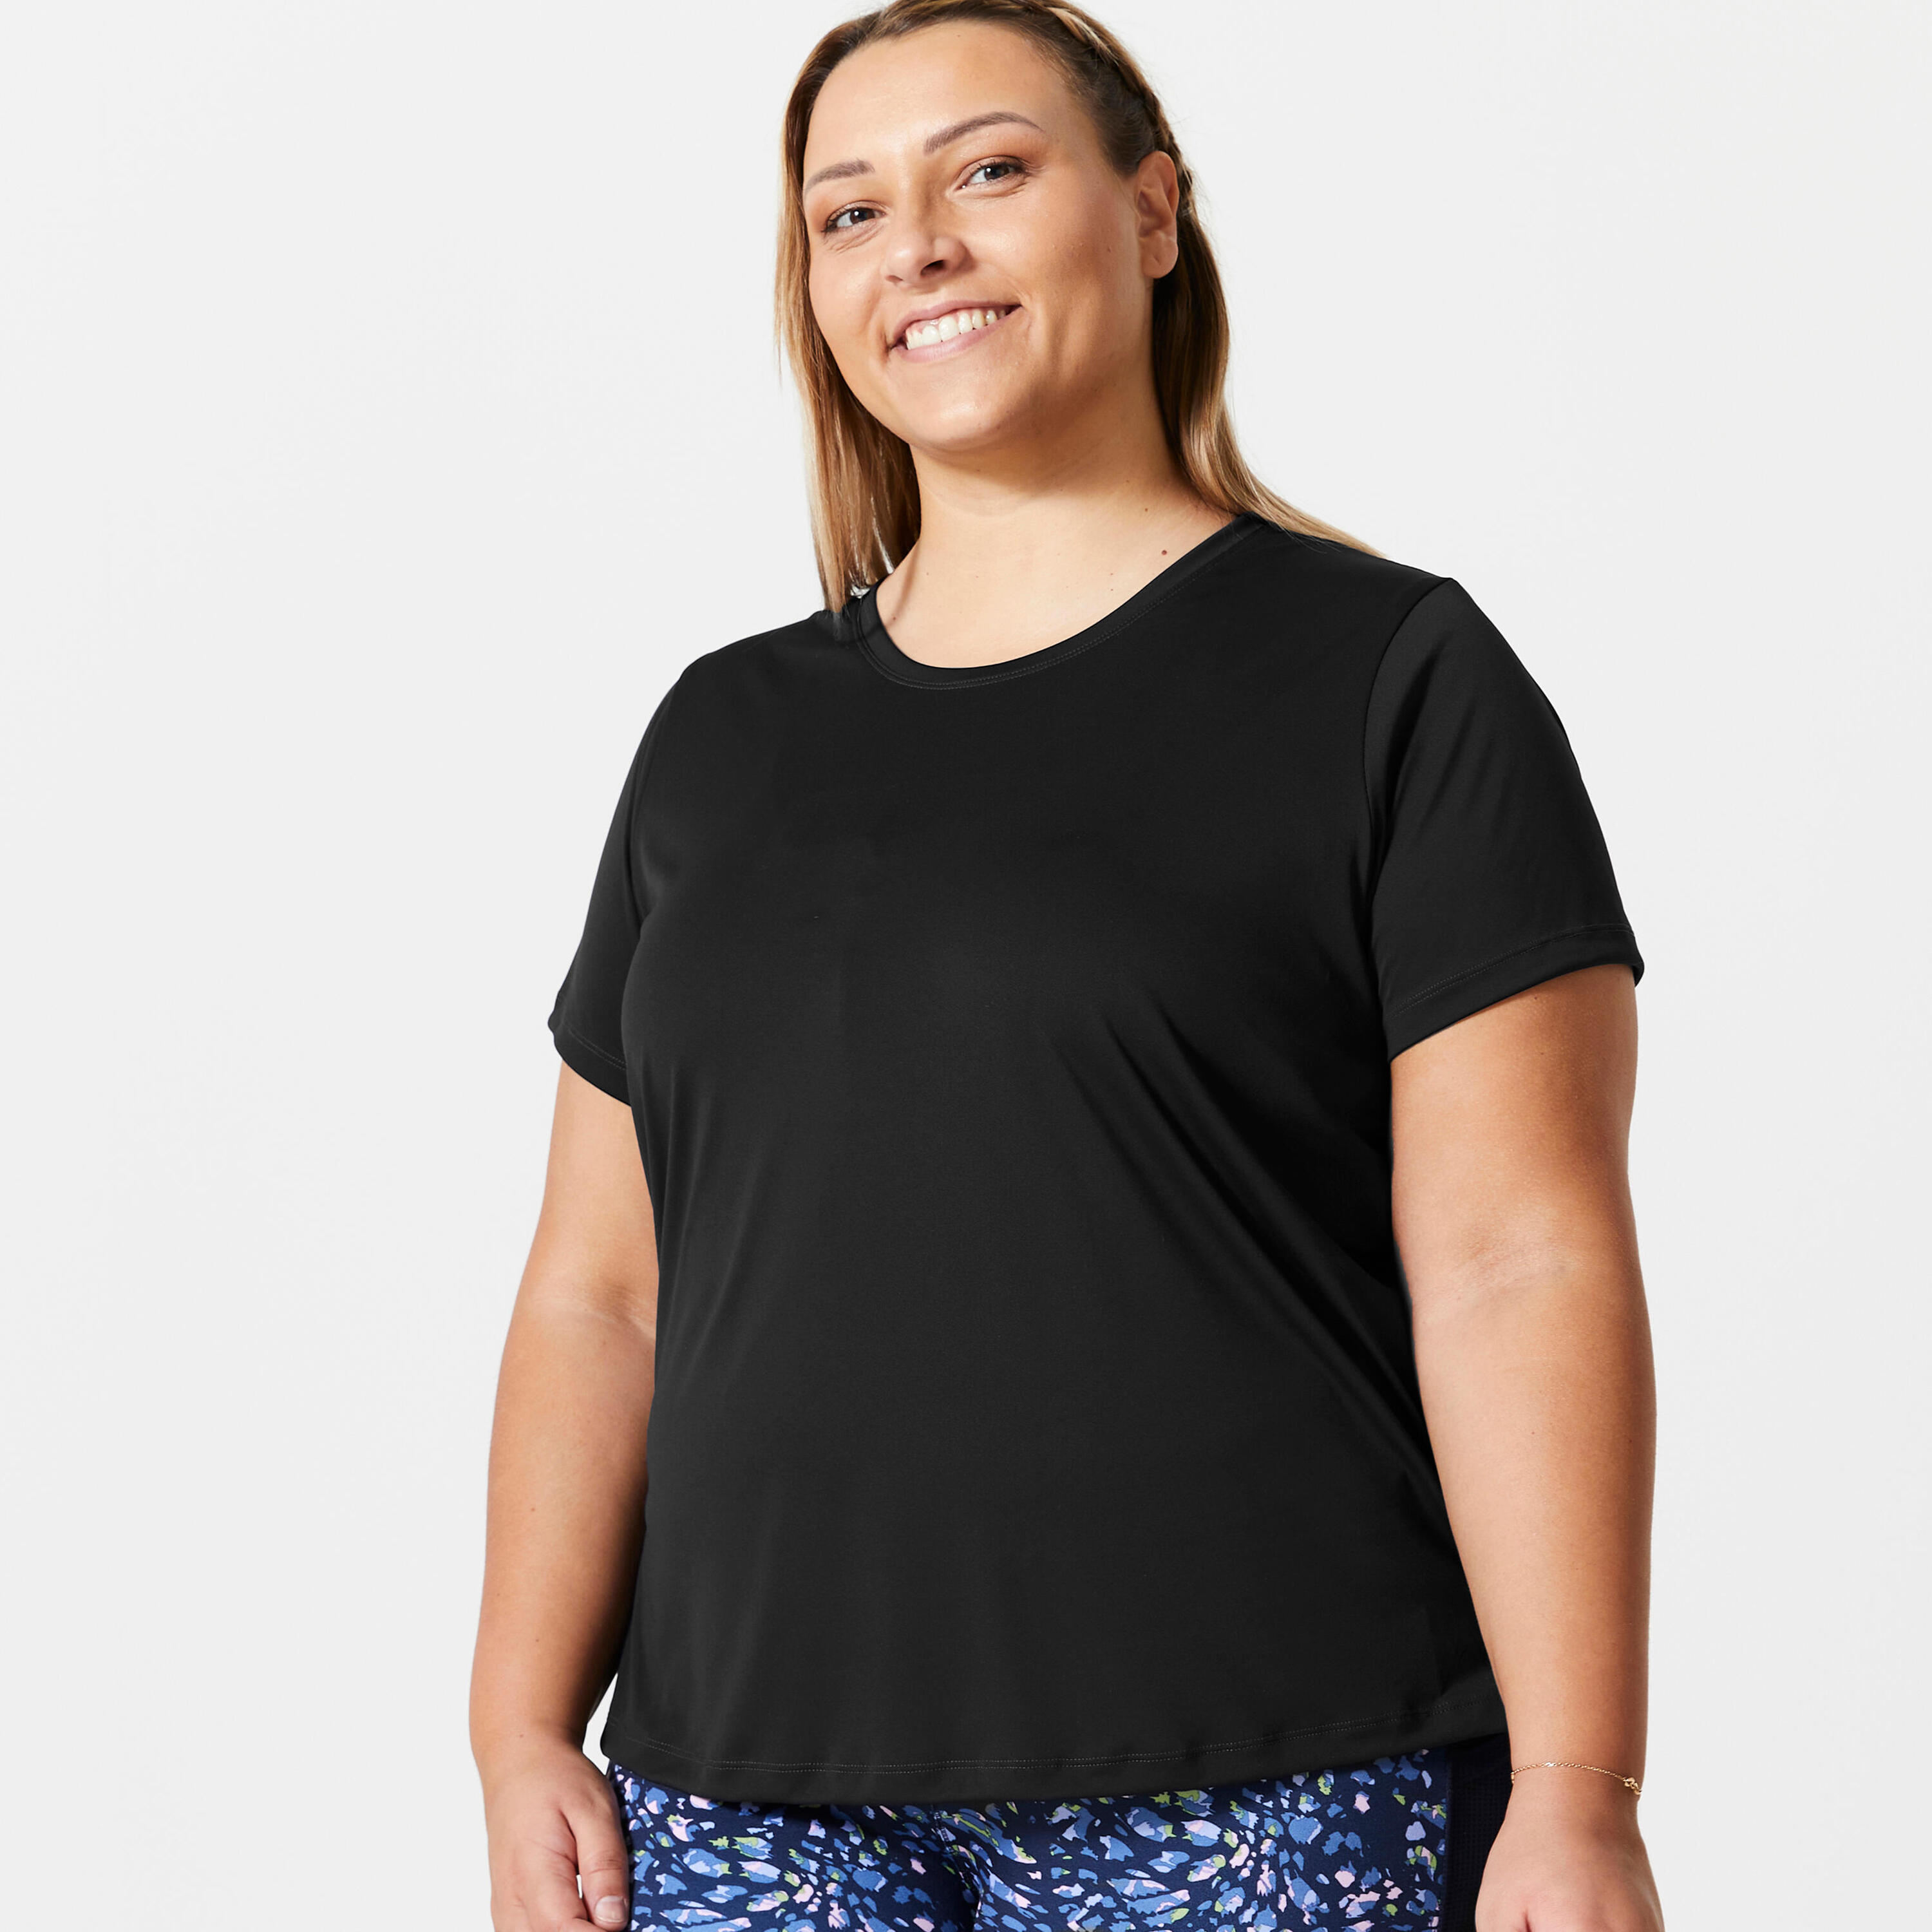 Women's Cardio Fitness Short-Sleeved Plus Size T-Shirt - Black 1/4